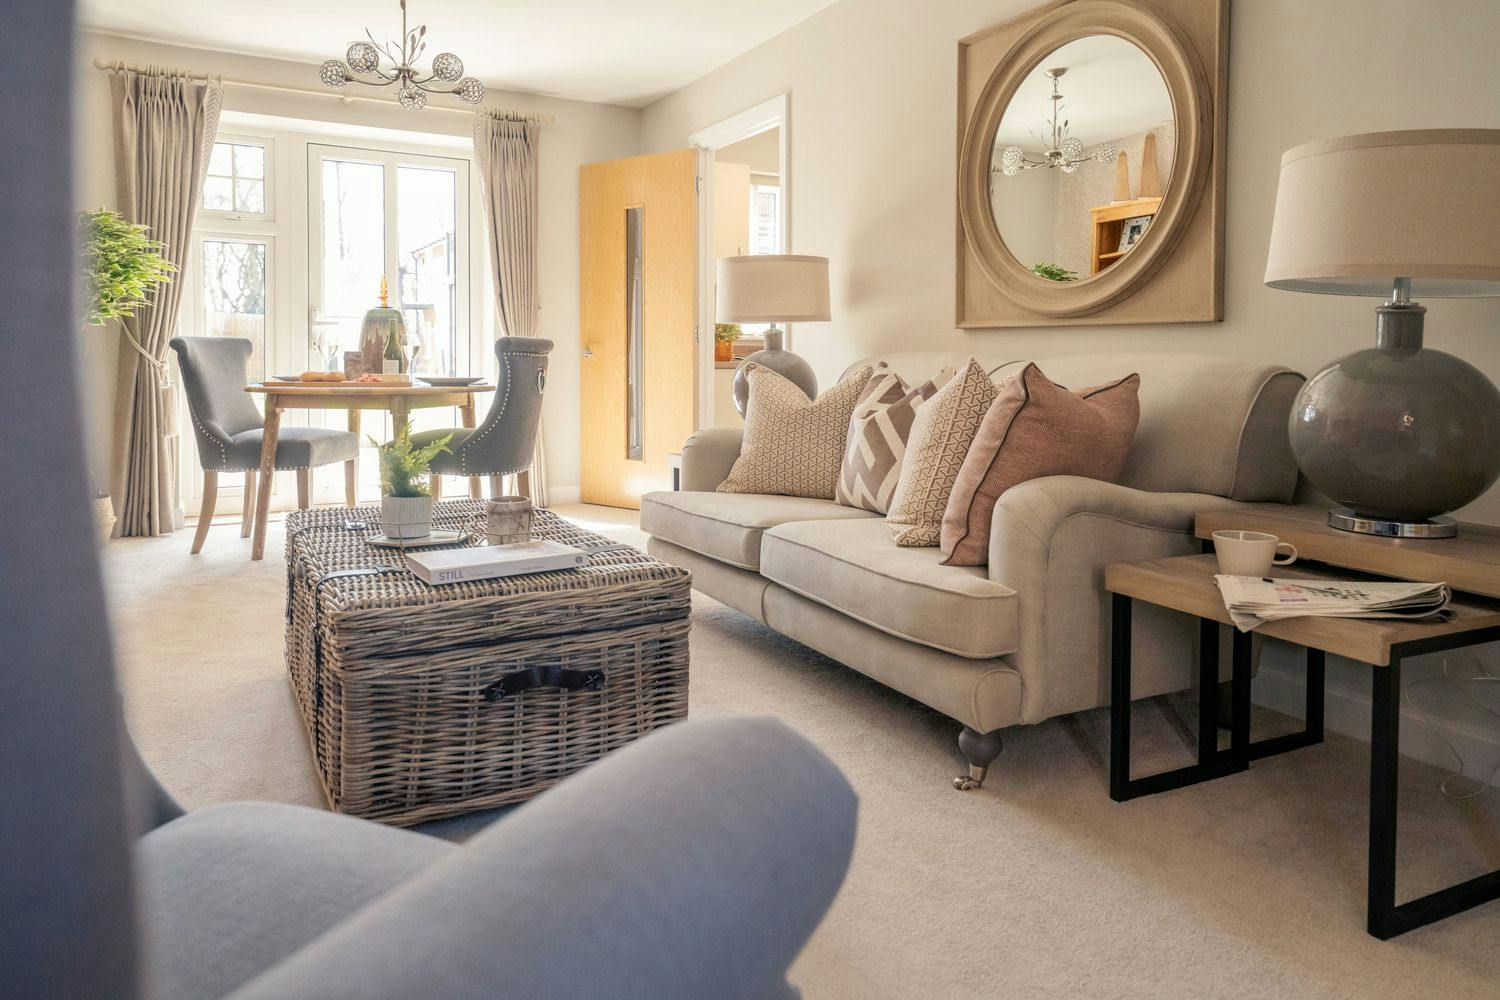  Living Room at Beckside Gardens Retirement Development in Guisborough, North Yorkshire